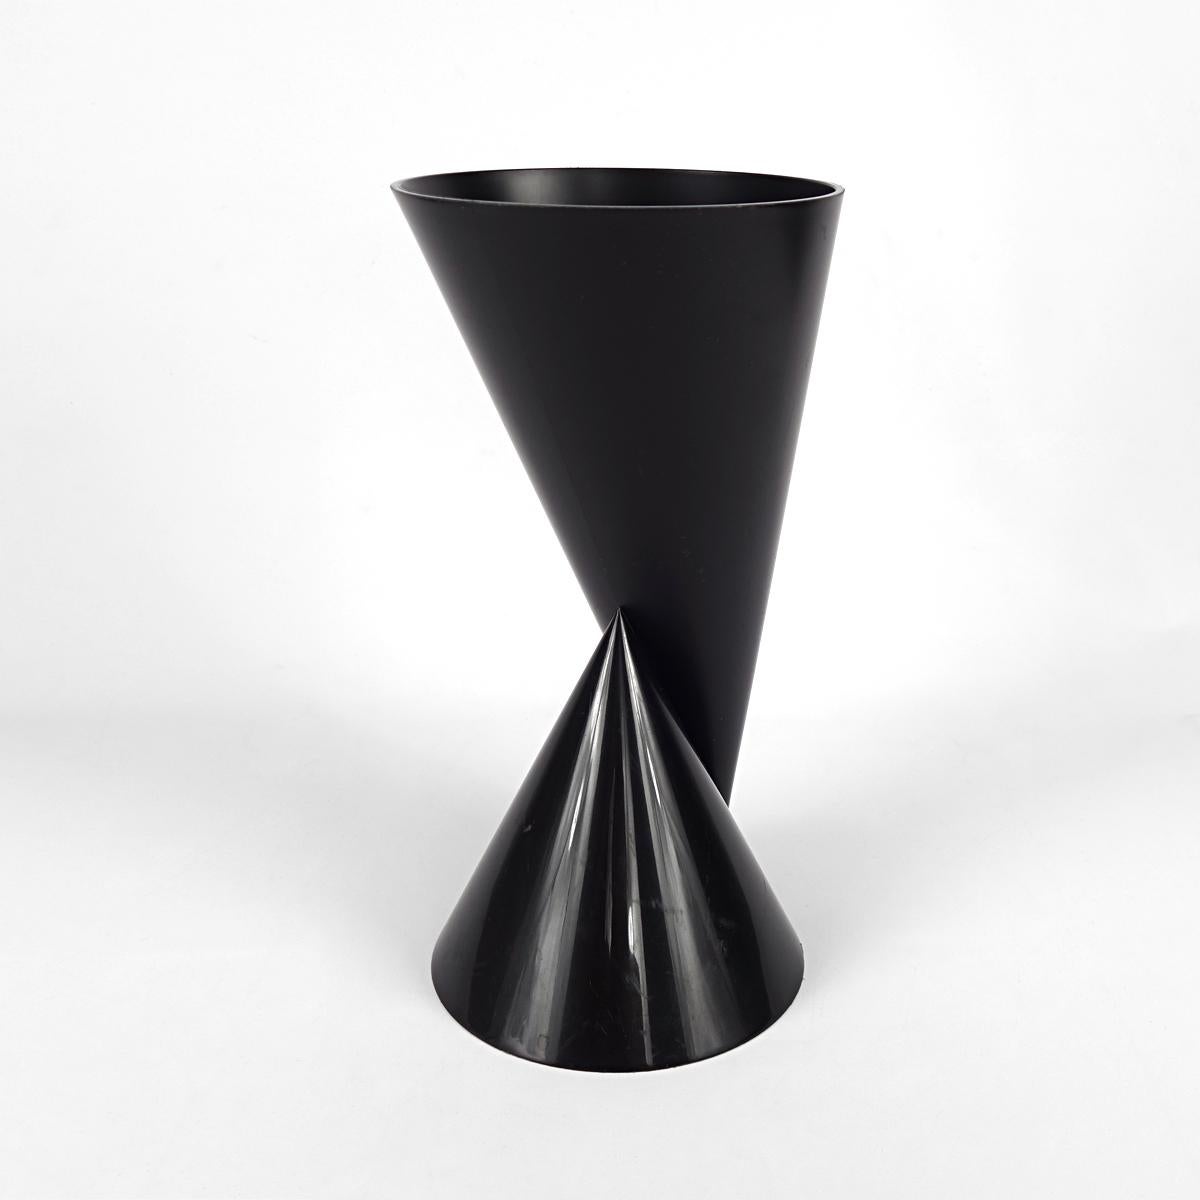 Post-Modern Set of 2 Plastic Vases Named Vase2 by Paul Baars In Good Condition For Sale In Doornspijk, NL